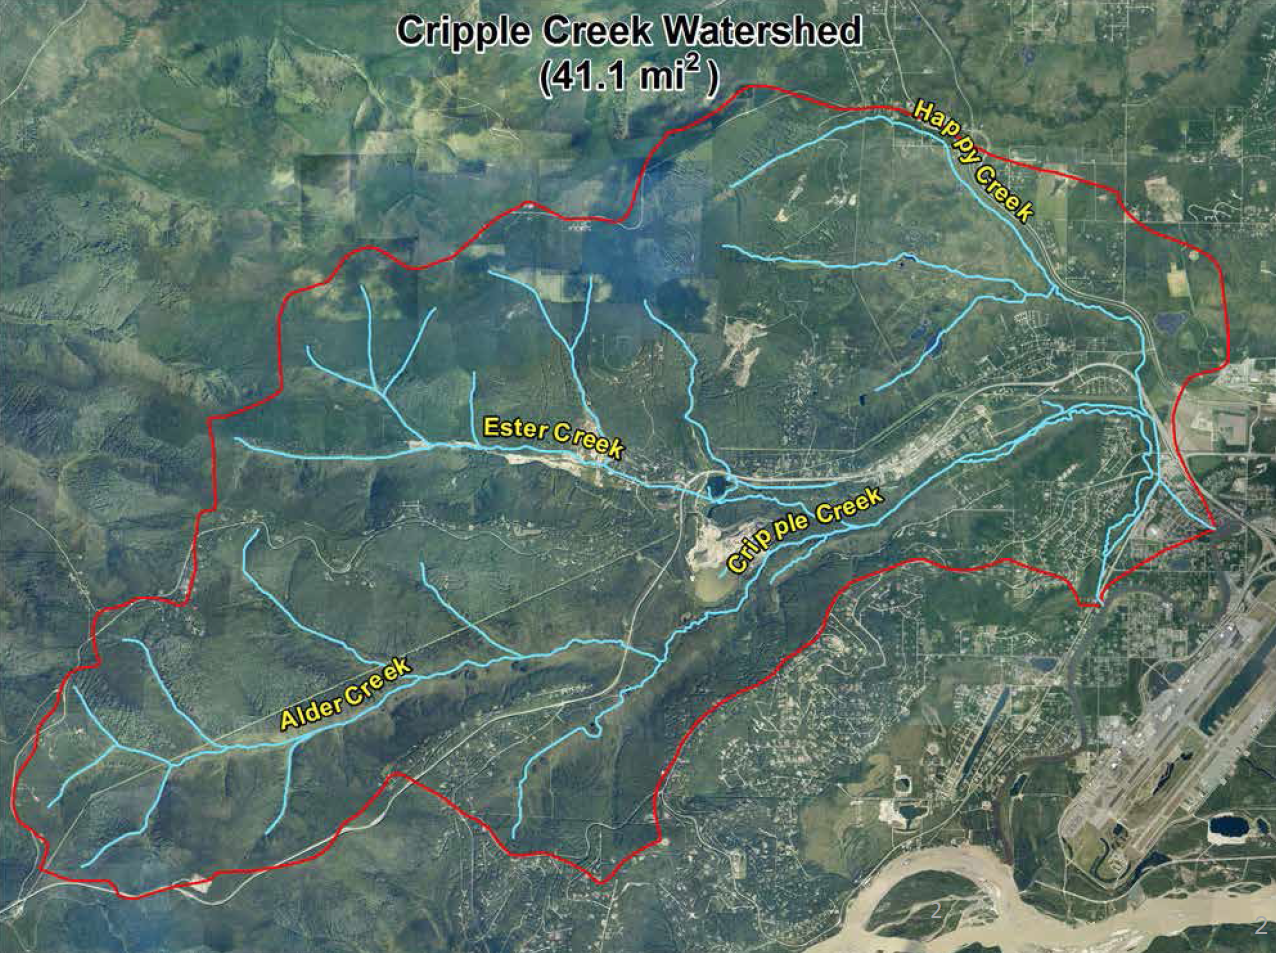 Cripple Creek Watershed, satellite imagery. 